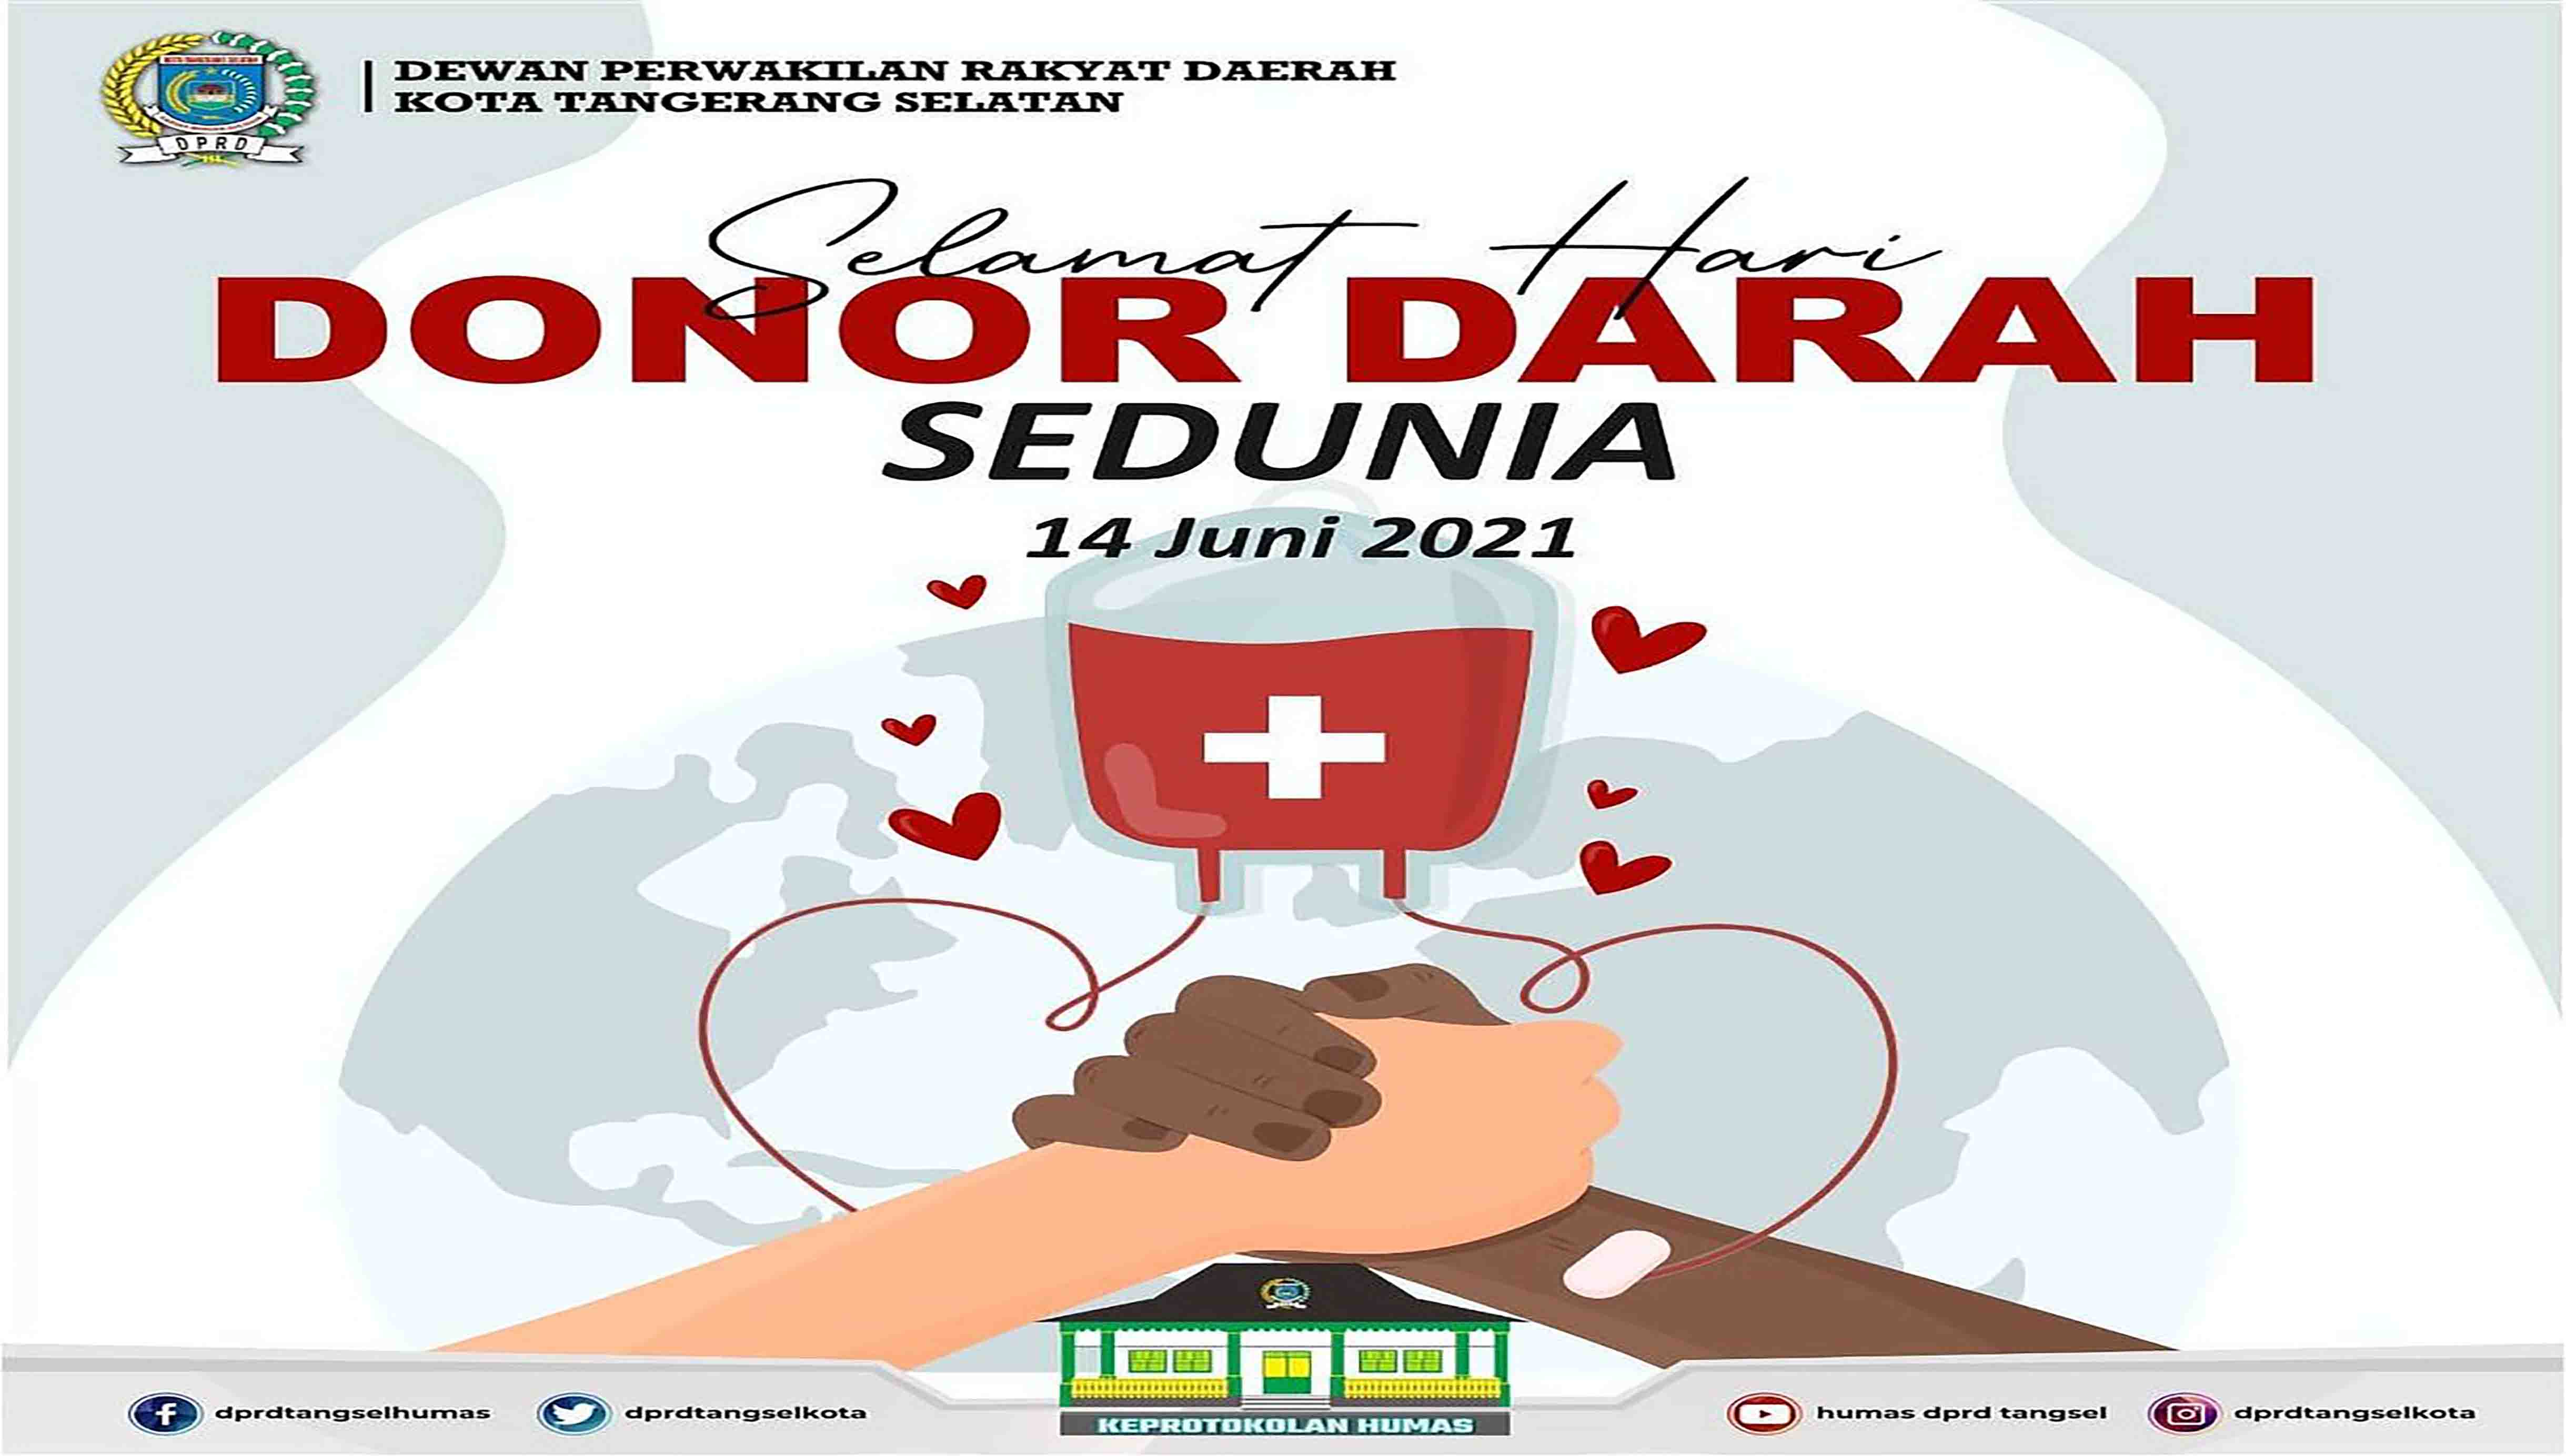 Memperingati Hari Donor Darah Sedunia